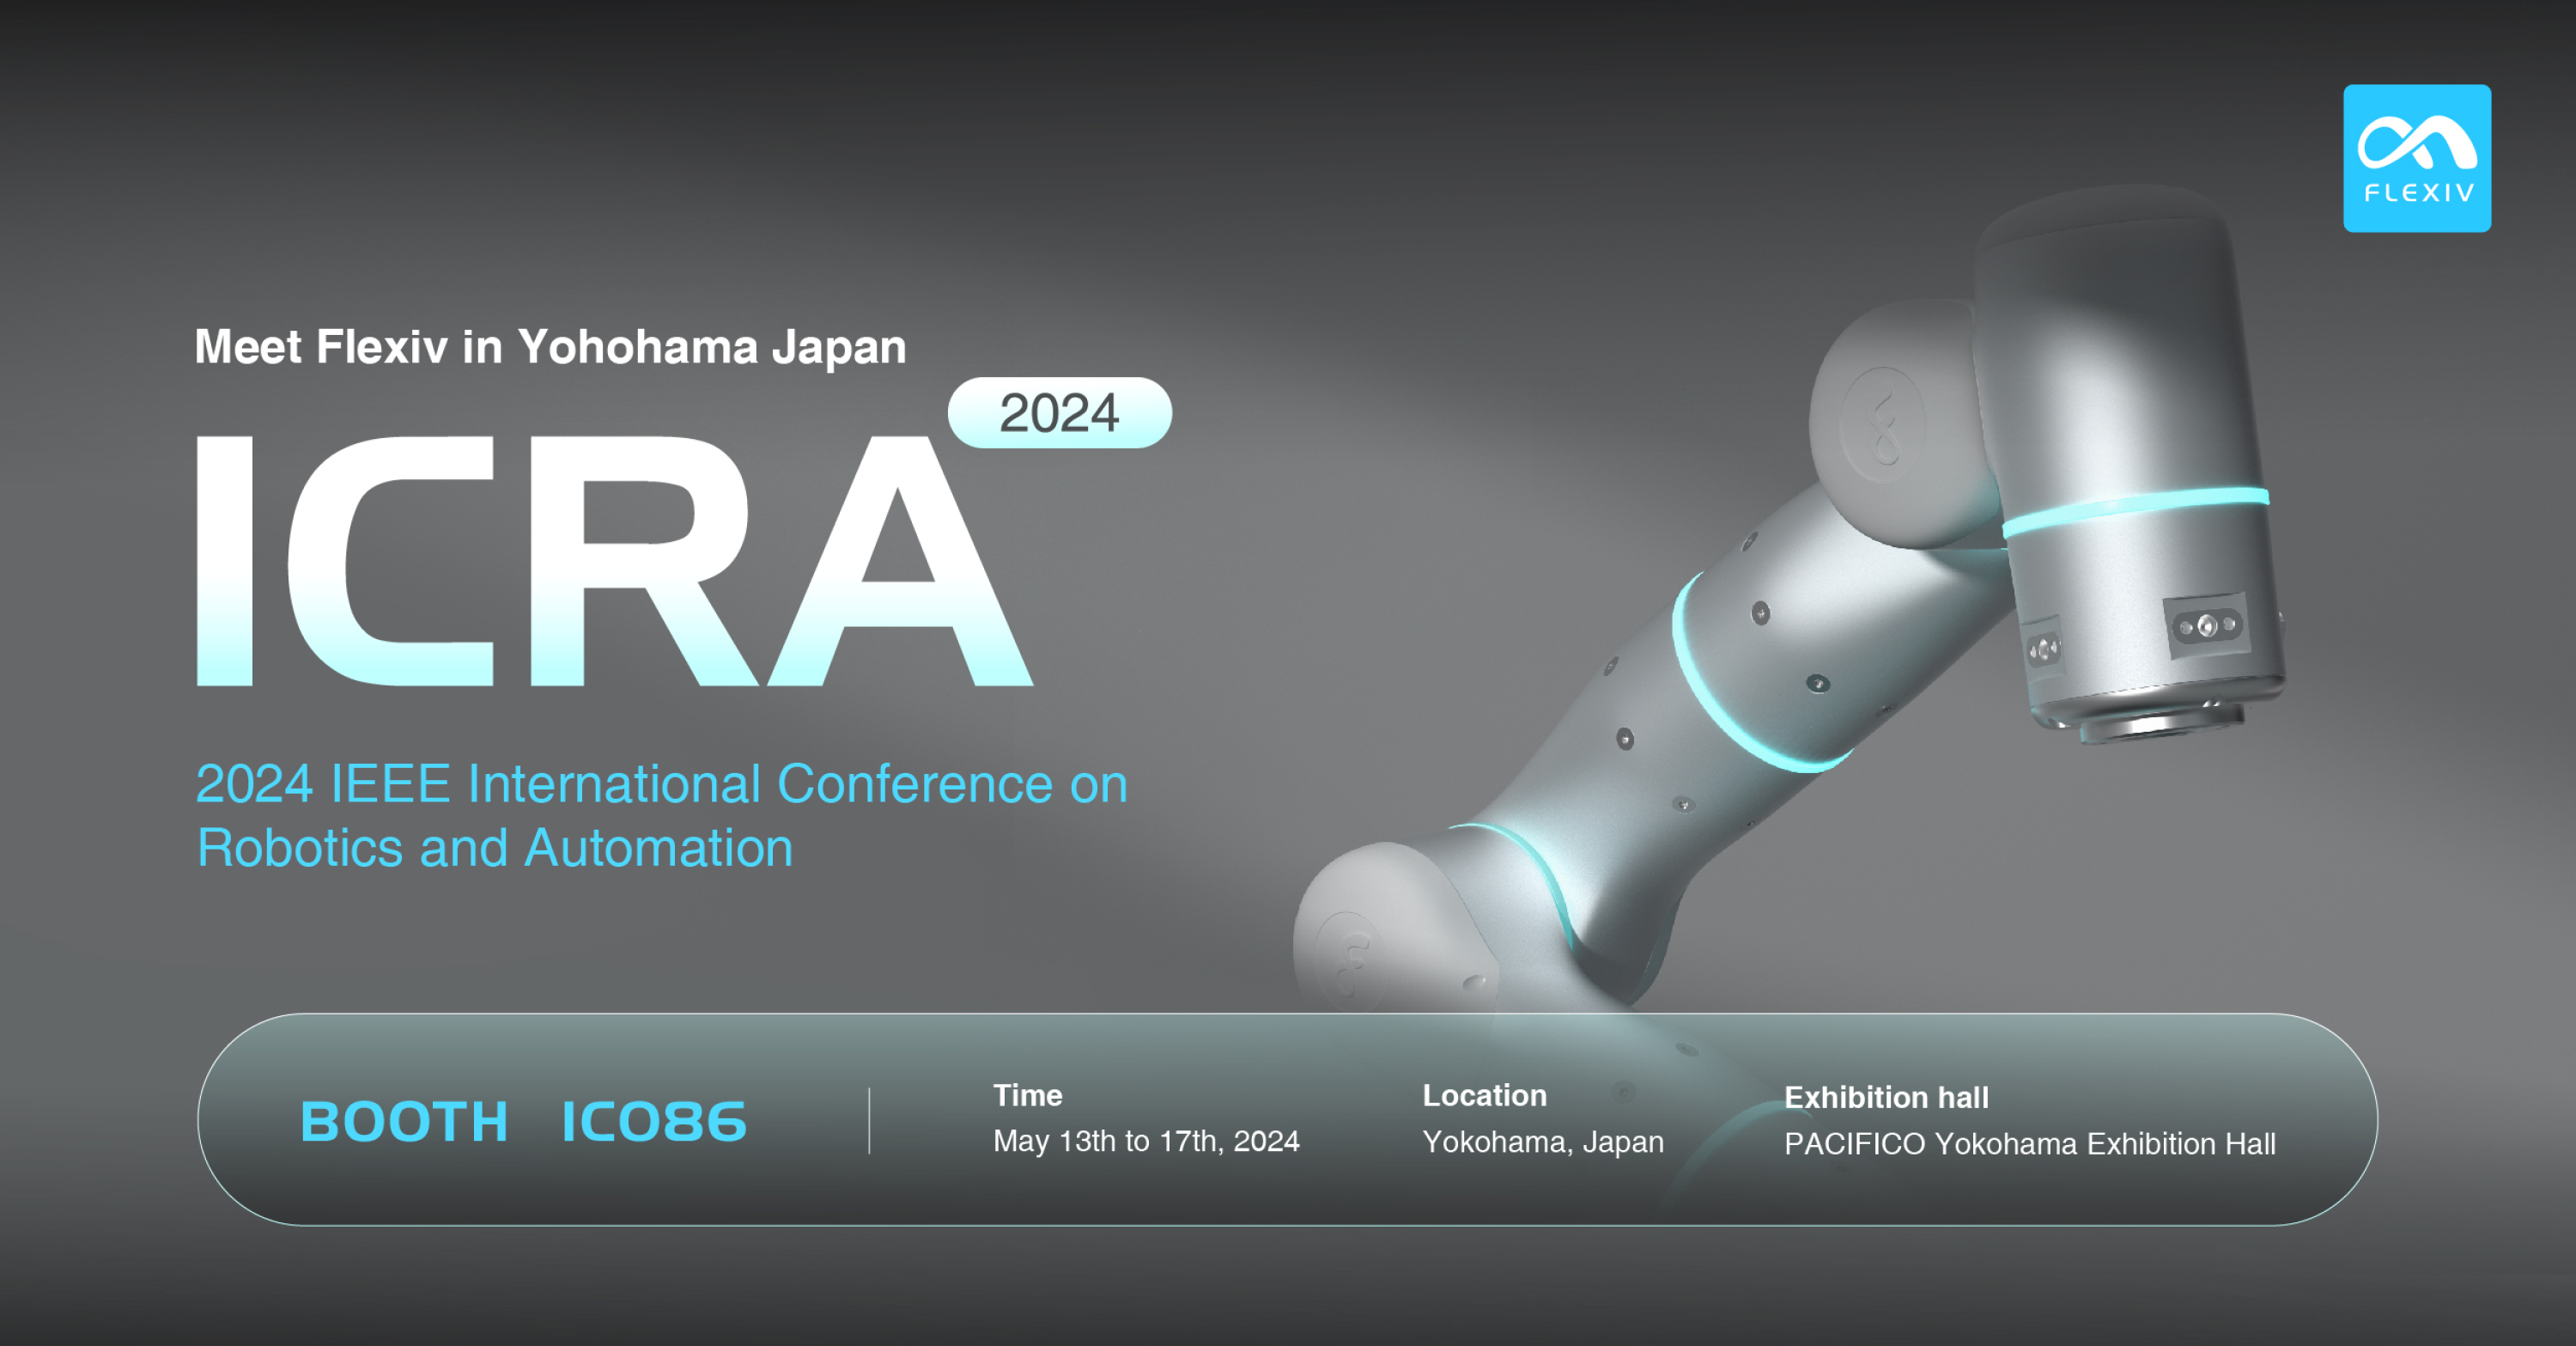 Flexiv Unveils Cutting-edge Robotics at ICRA 2024 to Help Address Japan's Labor Shortage